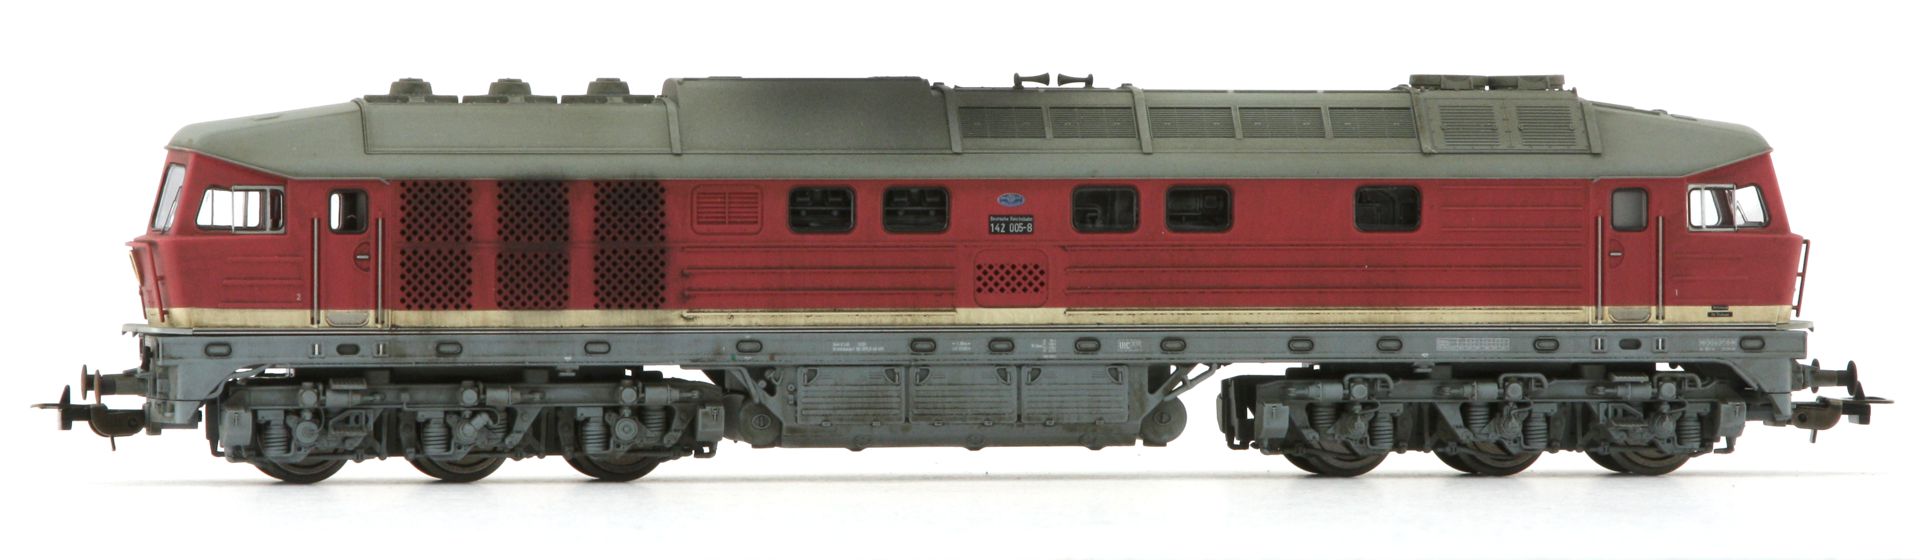 Saxonia 87055 - Diesellok 142 005-8, DR, Ep.IV, gealtert